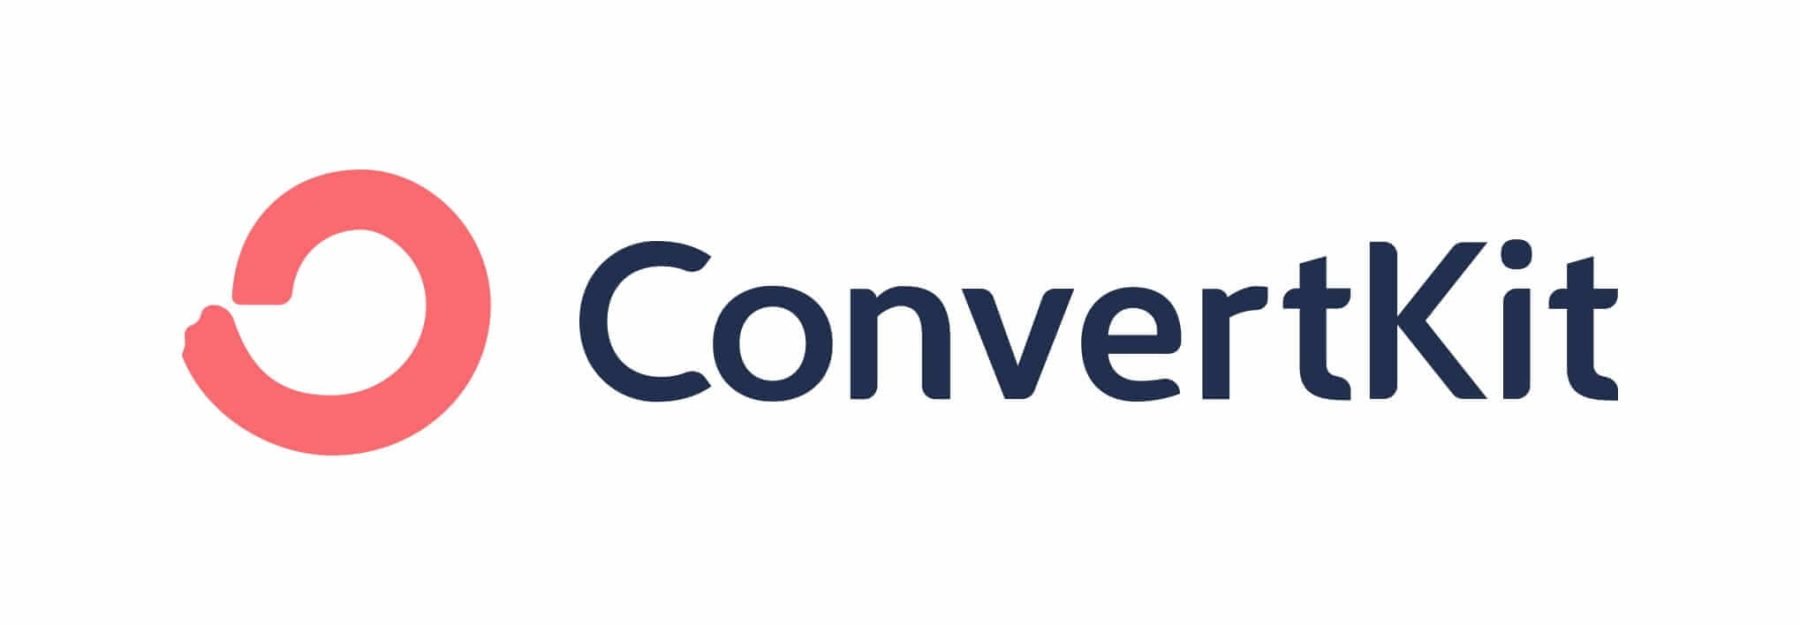 convertkit logo mark